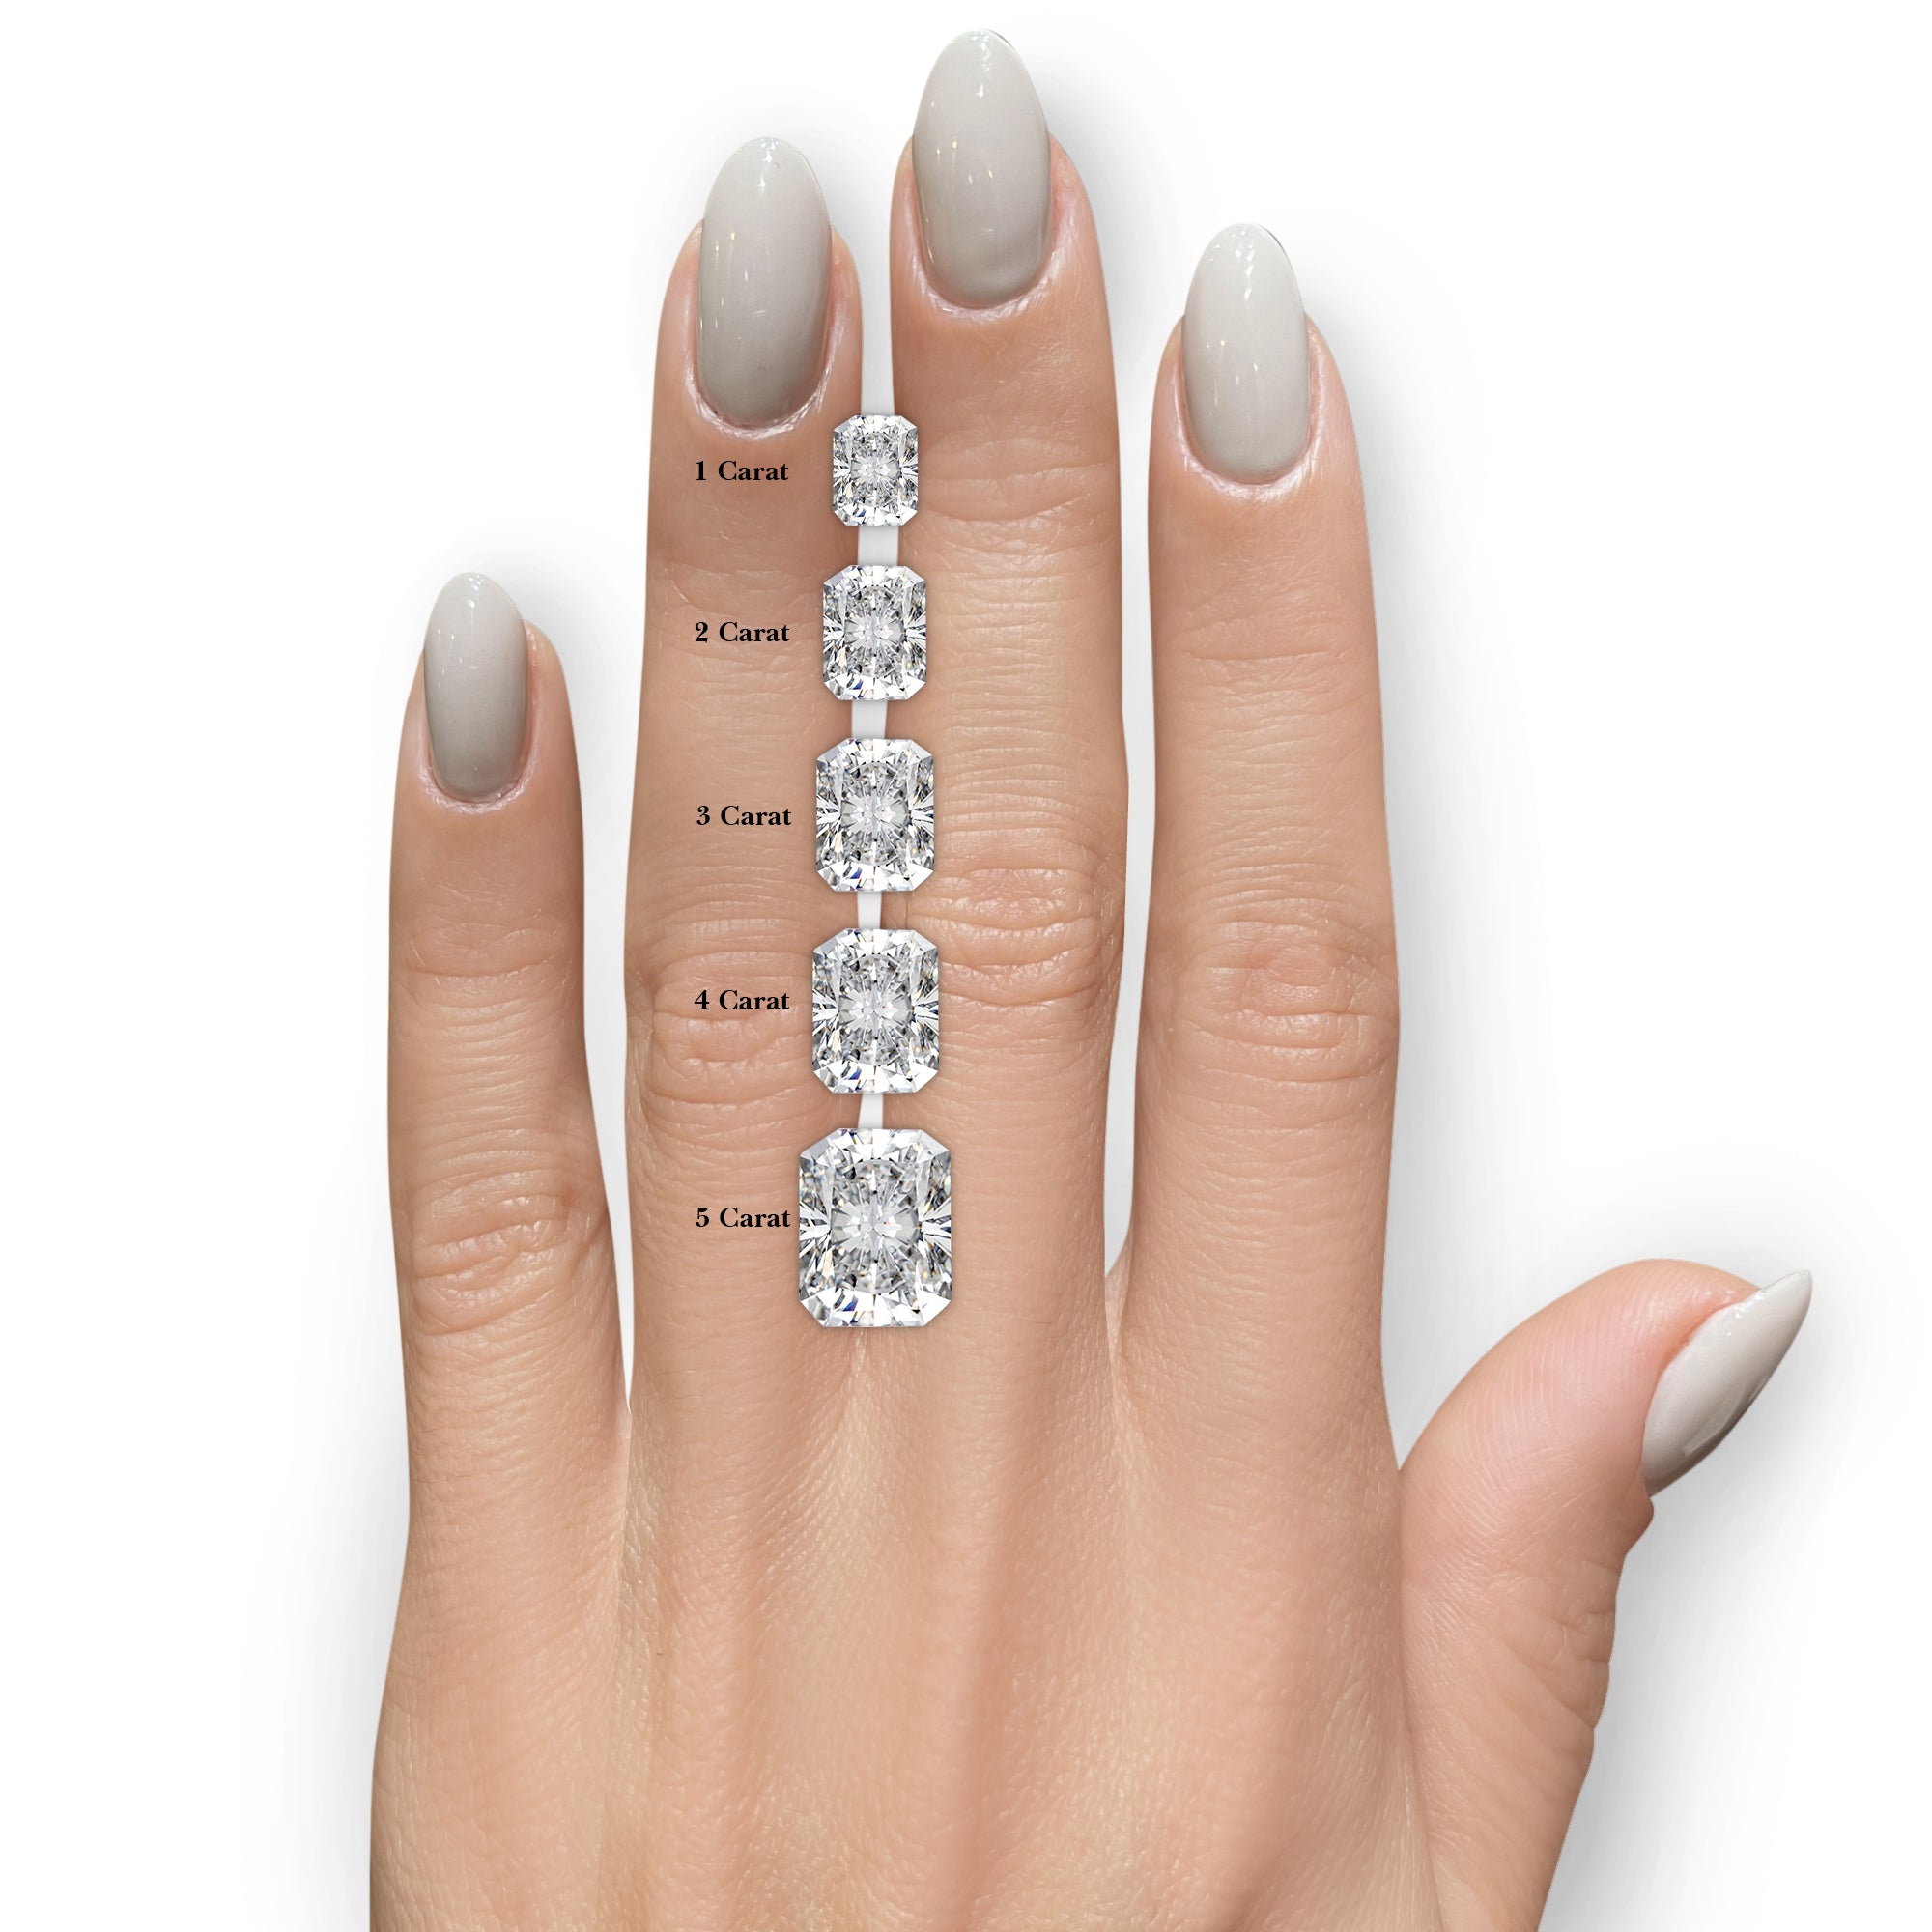 Lana Moissanite & Diamonds Ring -18K White Gold